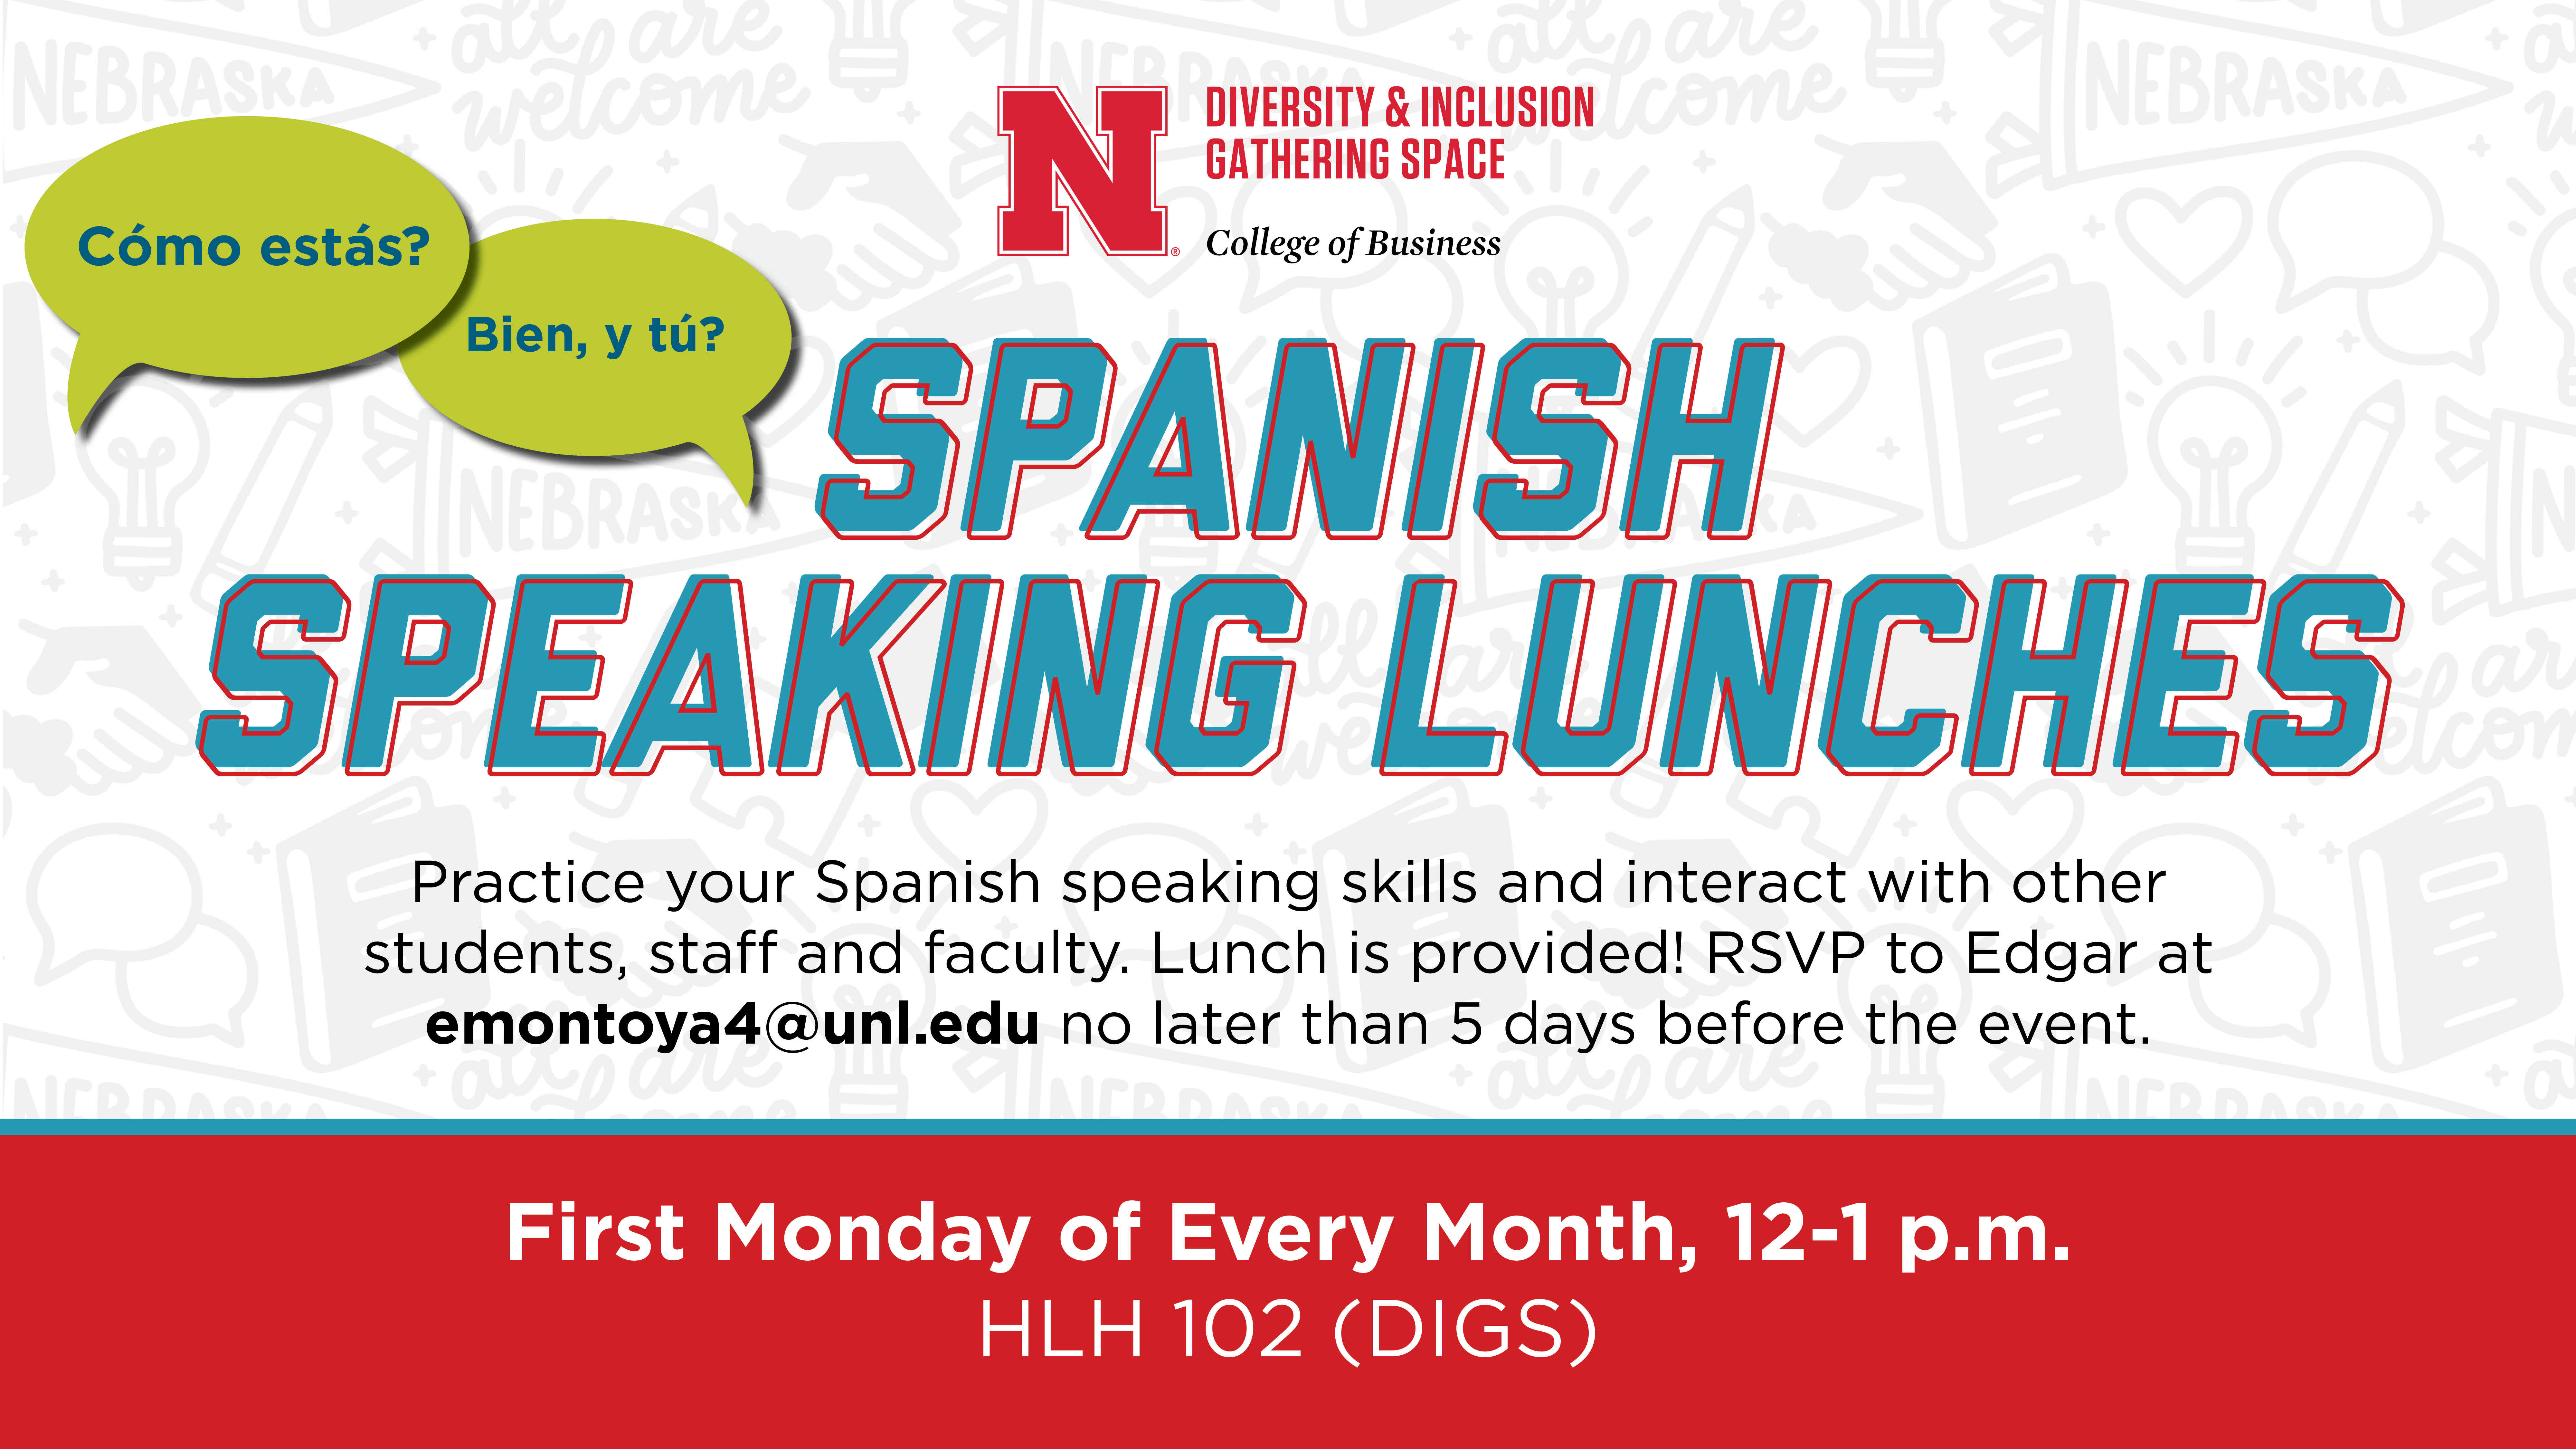 DIGS hosts Spanish Speaking Luncheons